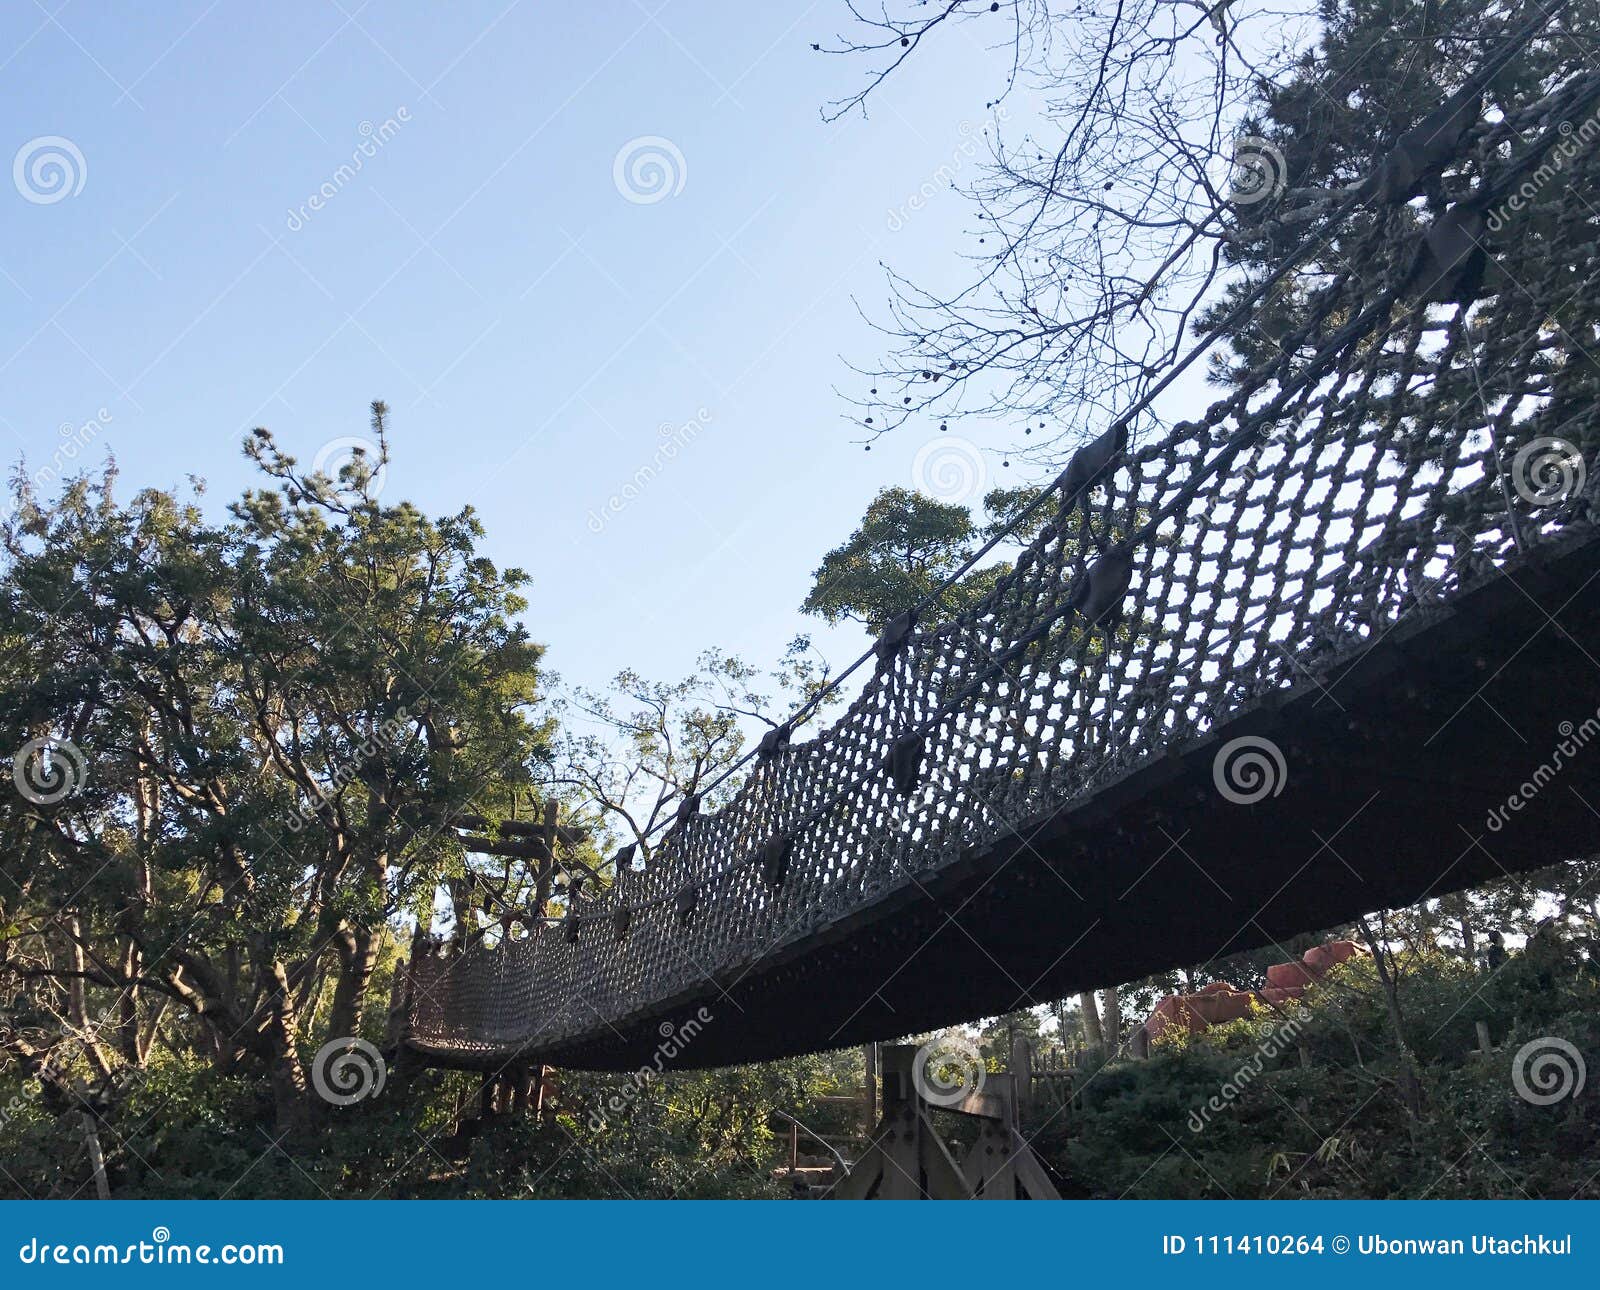 Wooden and Rope Net Bridge between Trees Stock Photo - Image of